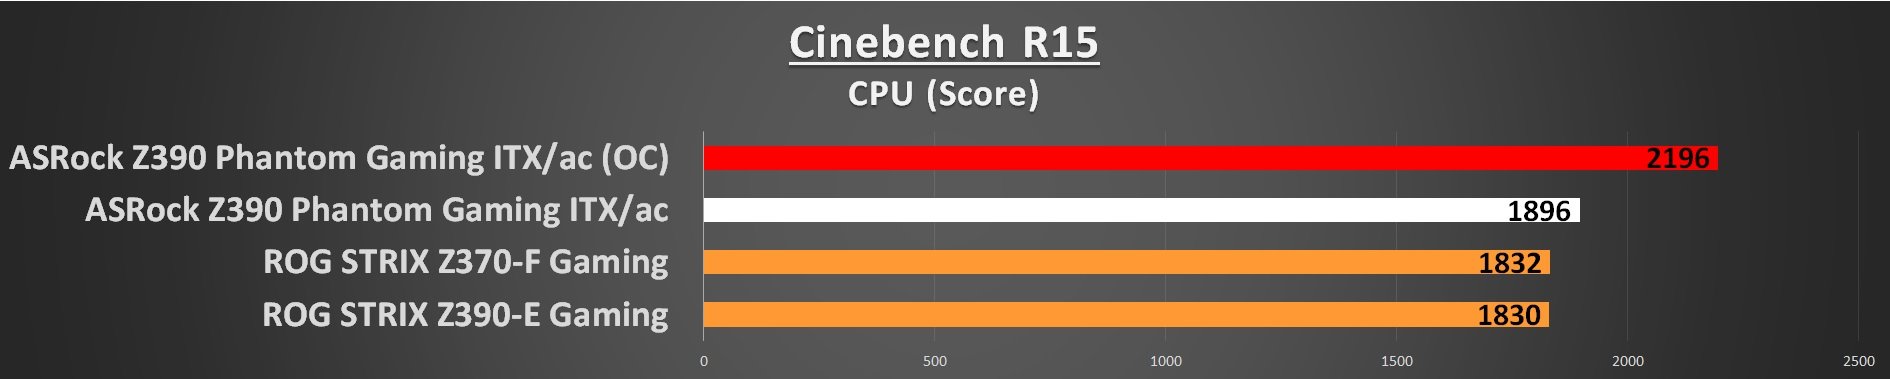 Cinebench R15 CPU Overclock